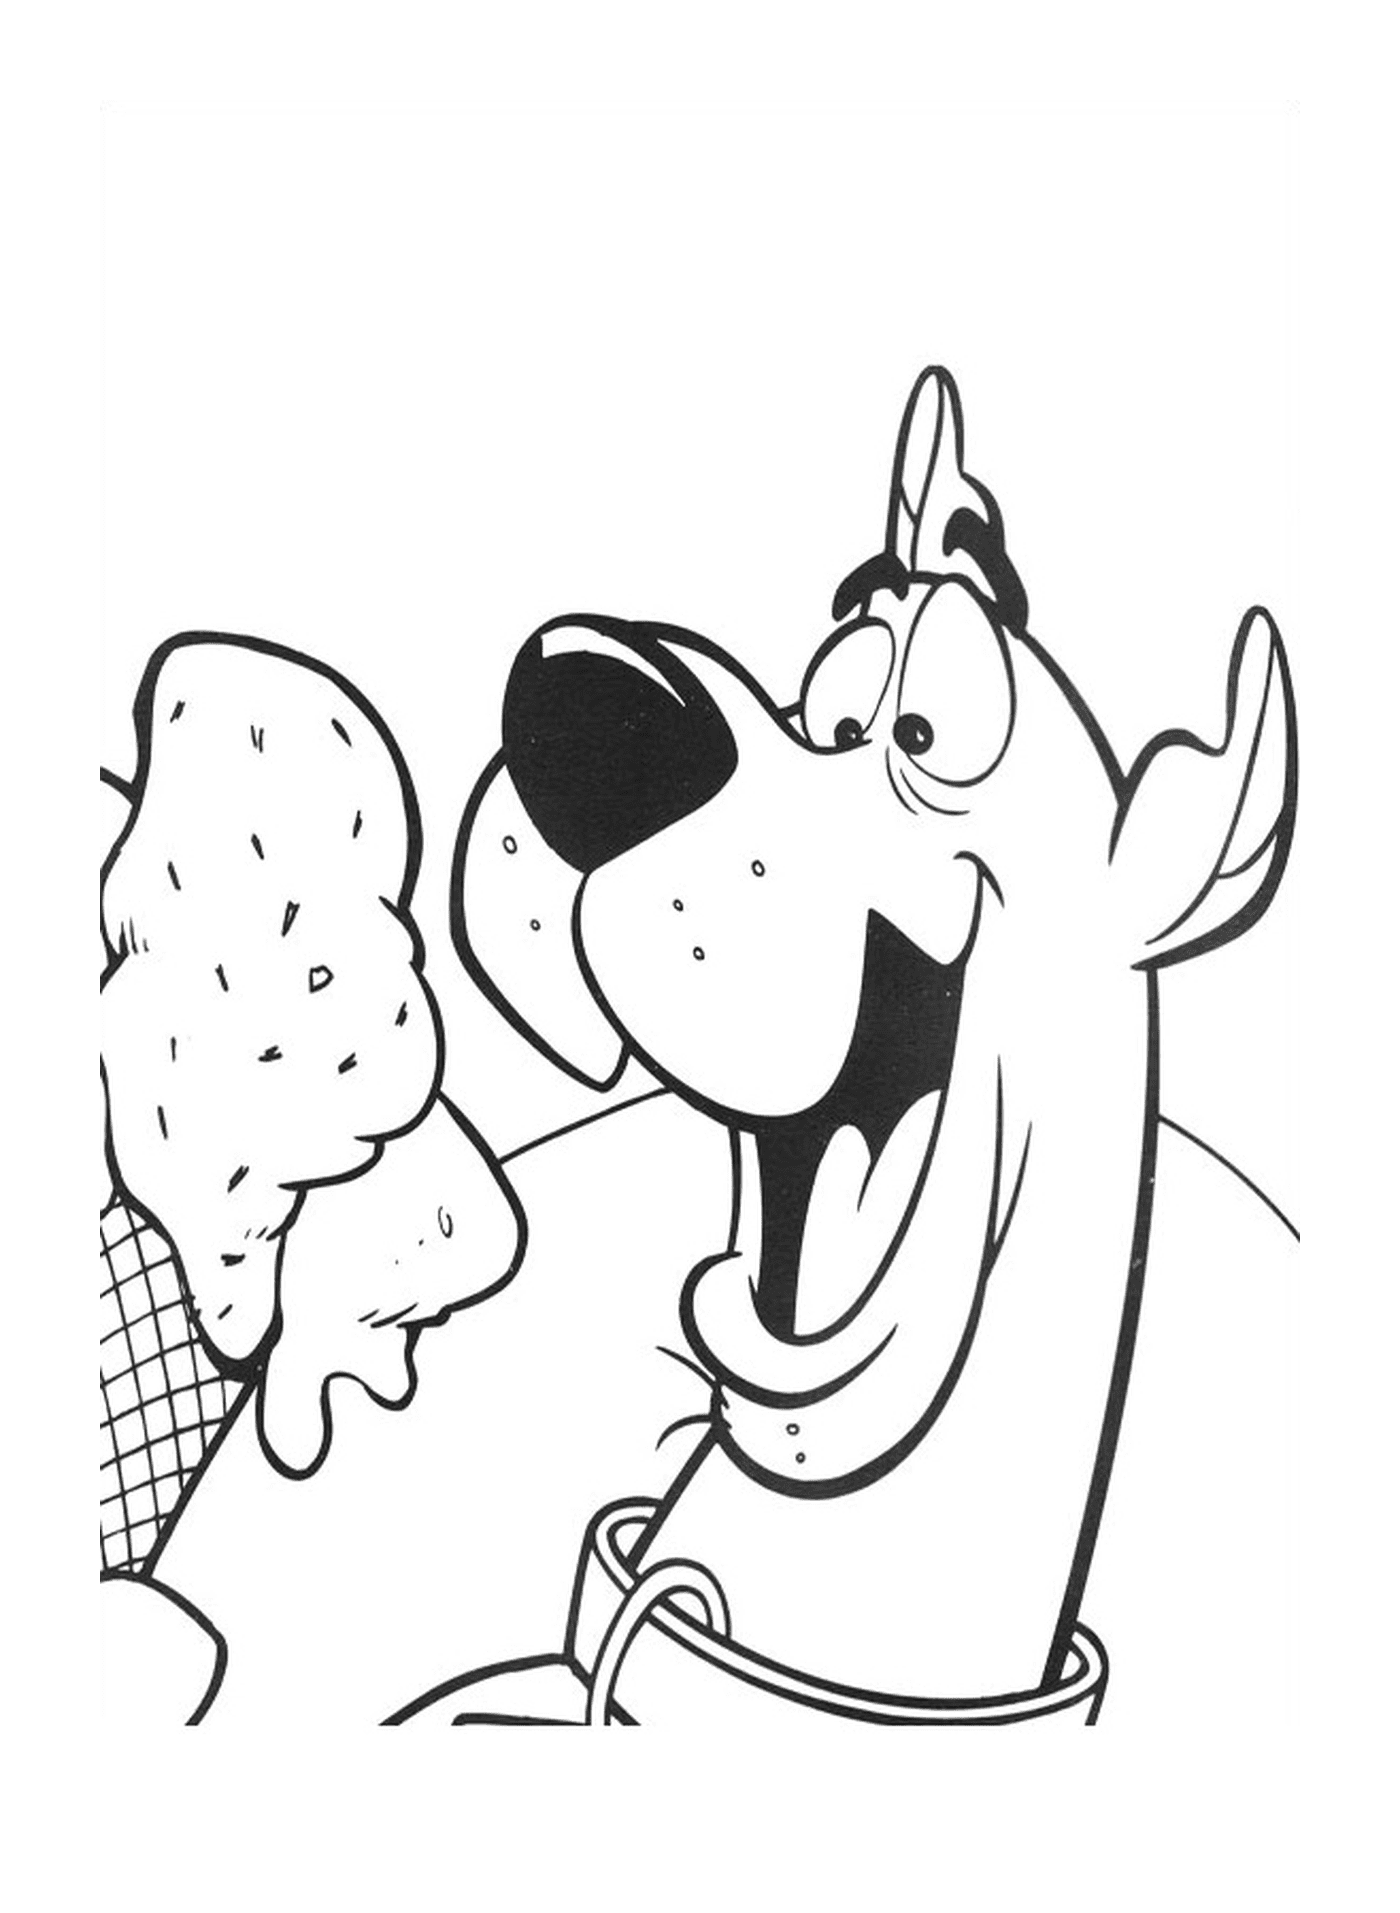  Собака ест мороженое 